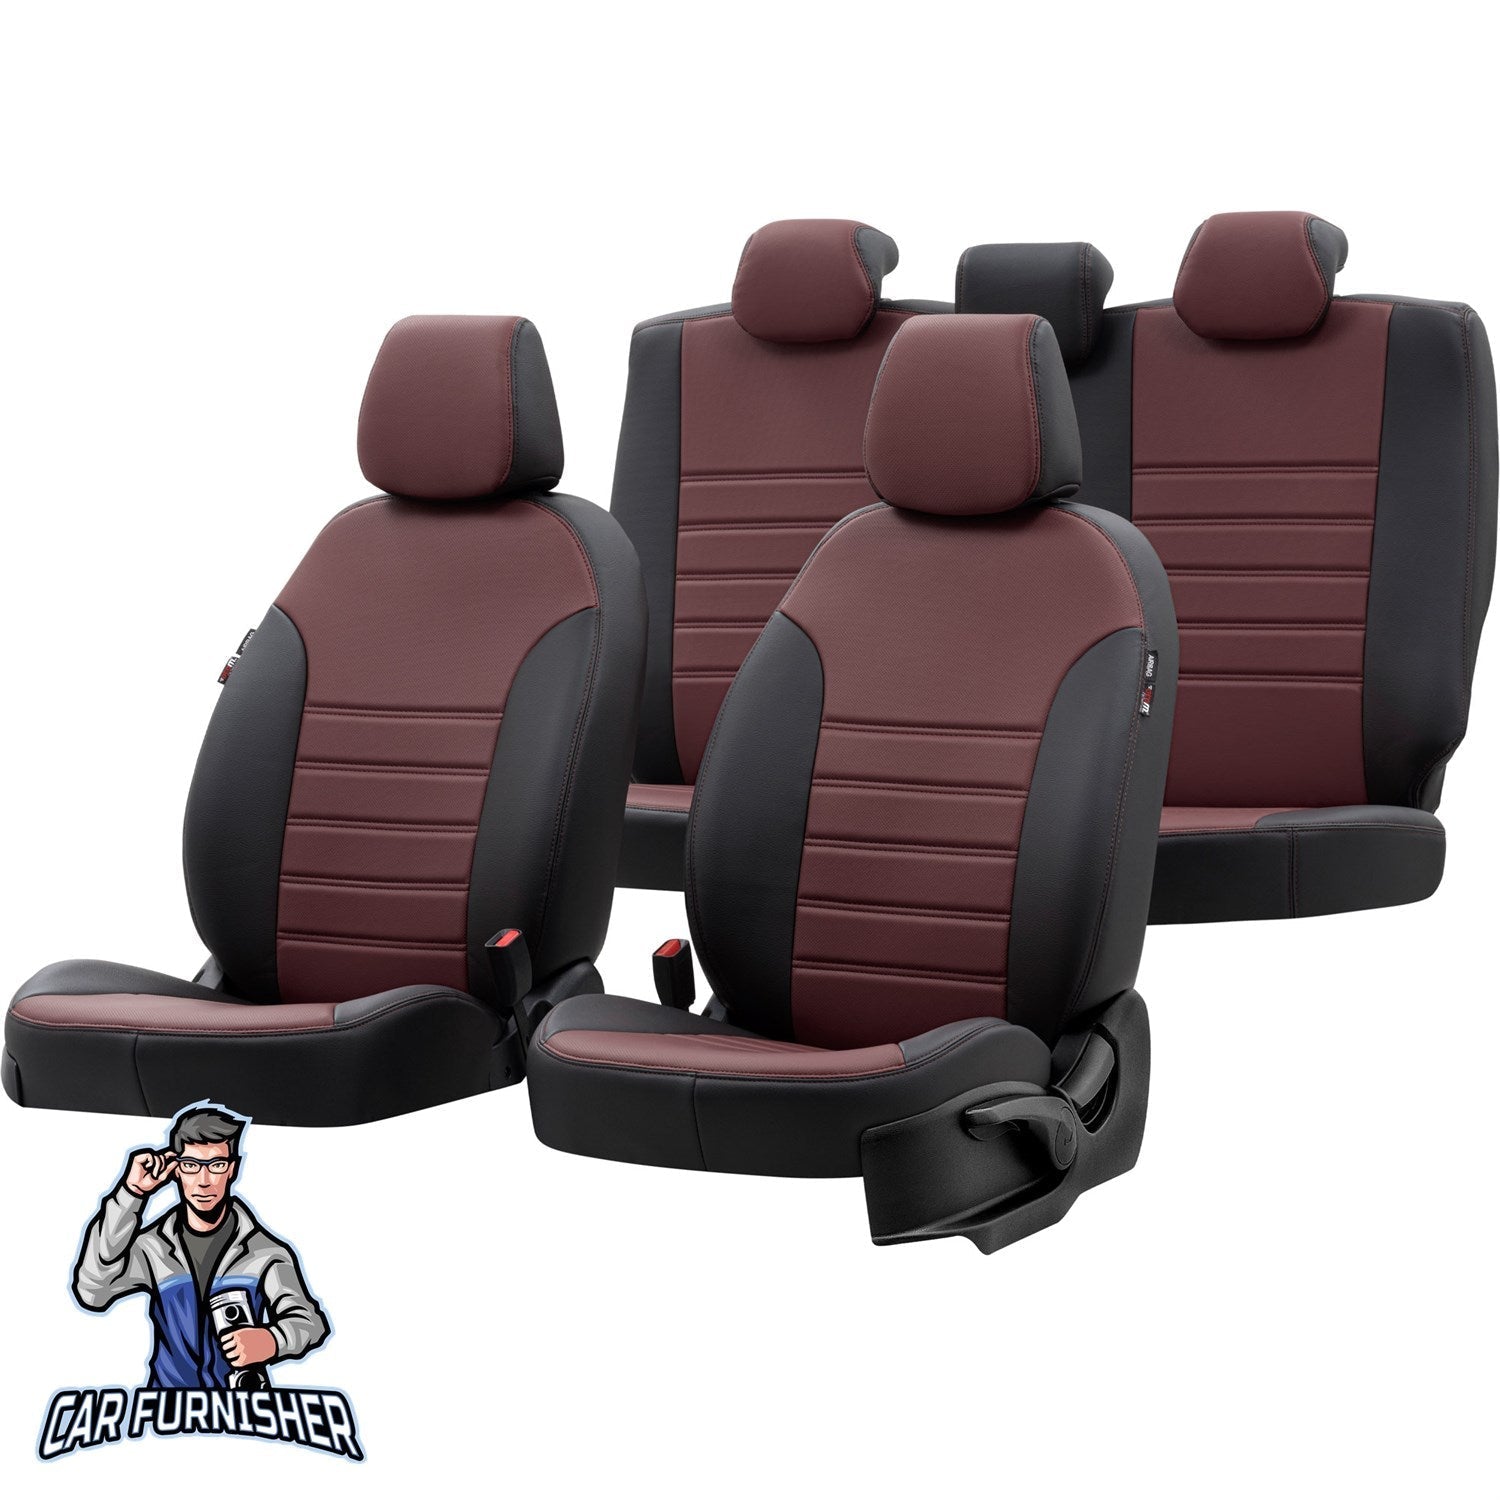 Seat Cordoba Car Seat Covers 2003-2009 Istanbul Design Burgundy Full Set (5 Seats + Handrest) Leather & Fabric